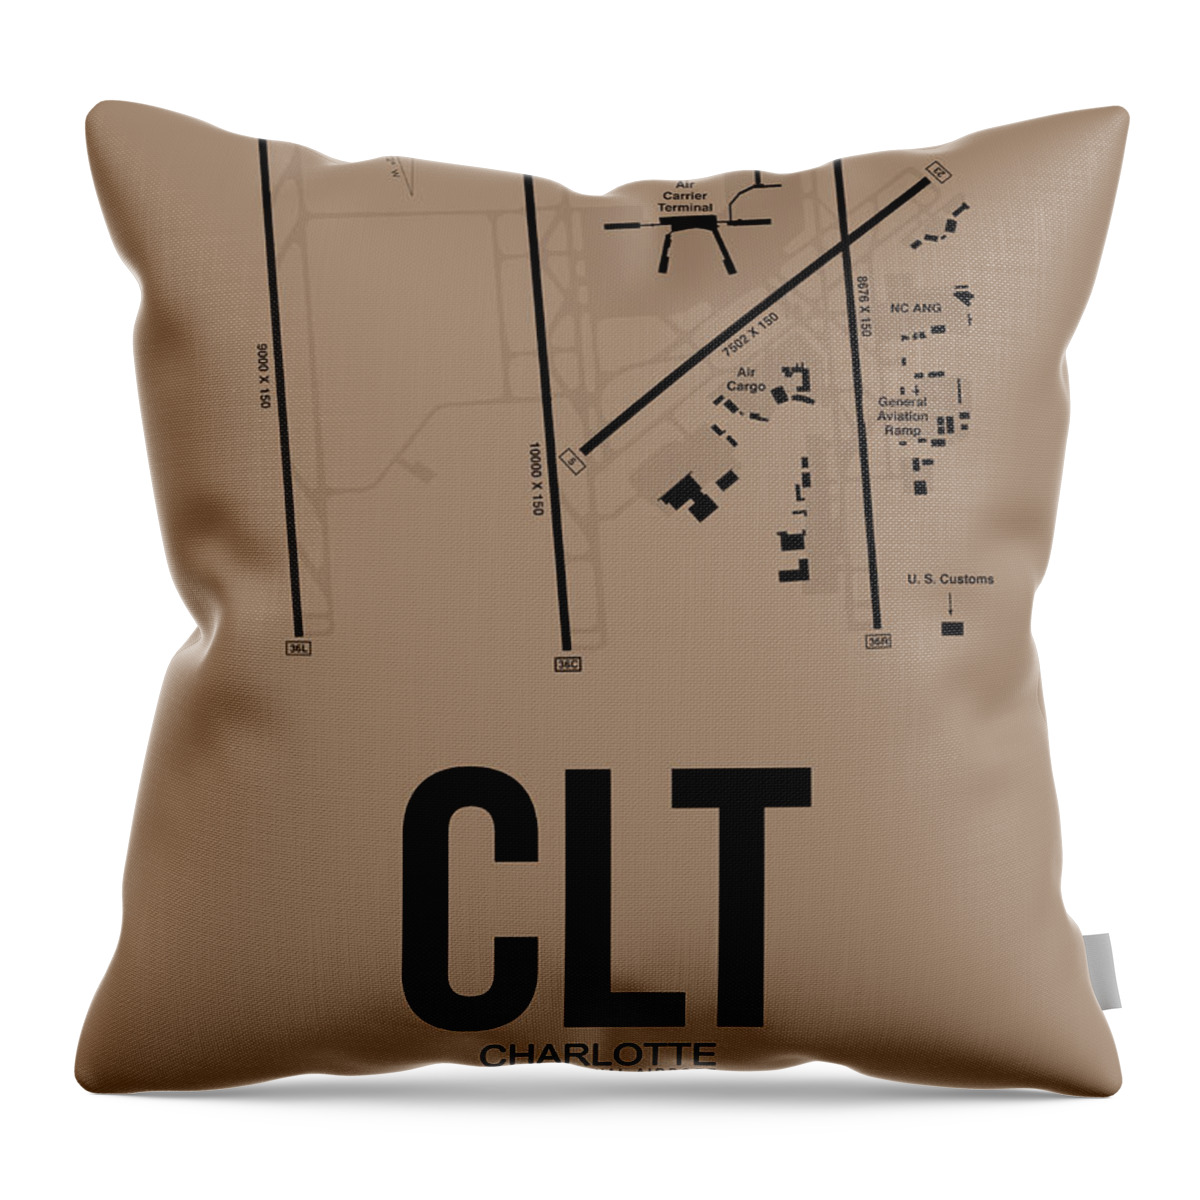 Charlotte Throw Pillow featuring the digital art Charlotte North Carolina by Naxart Studio